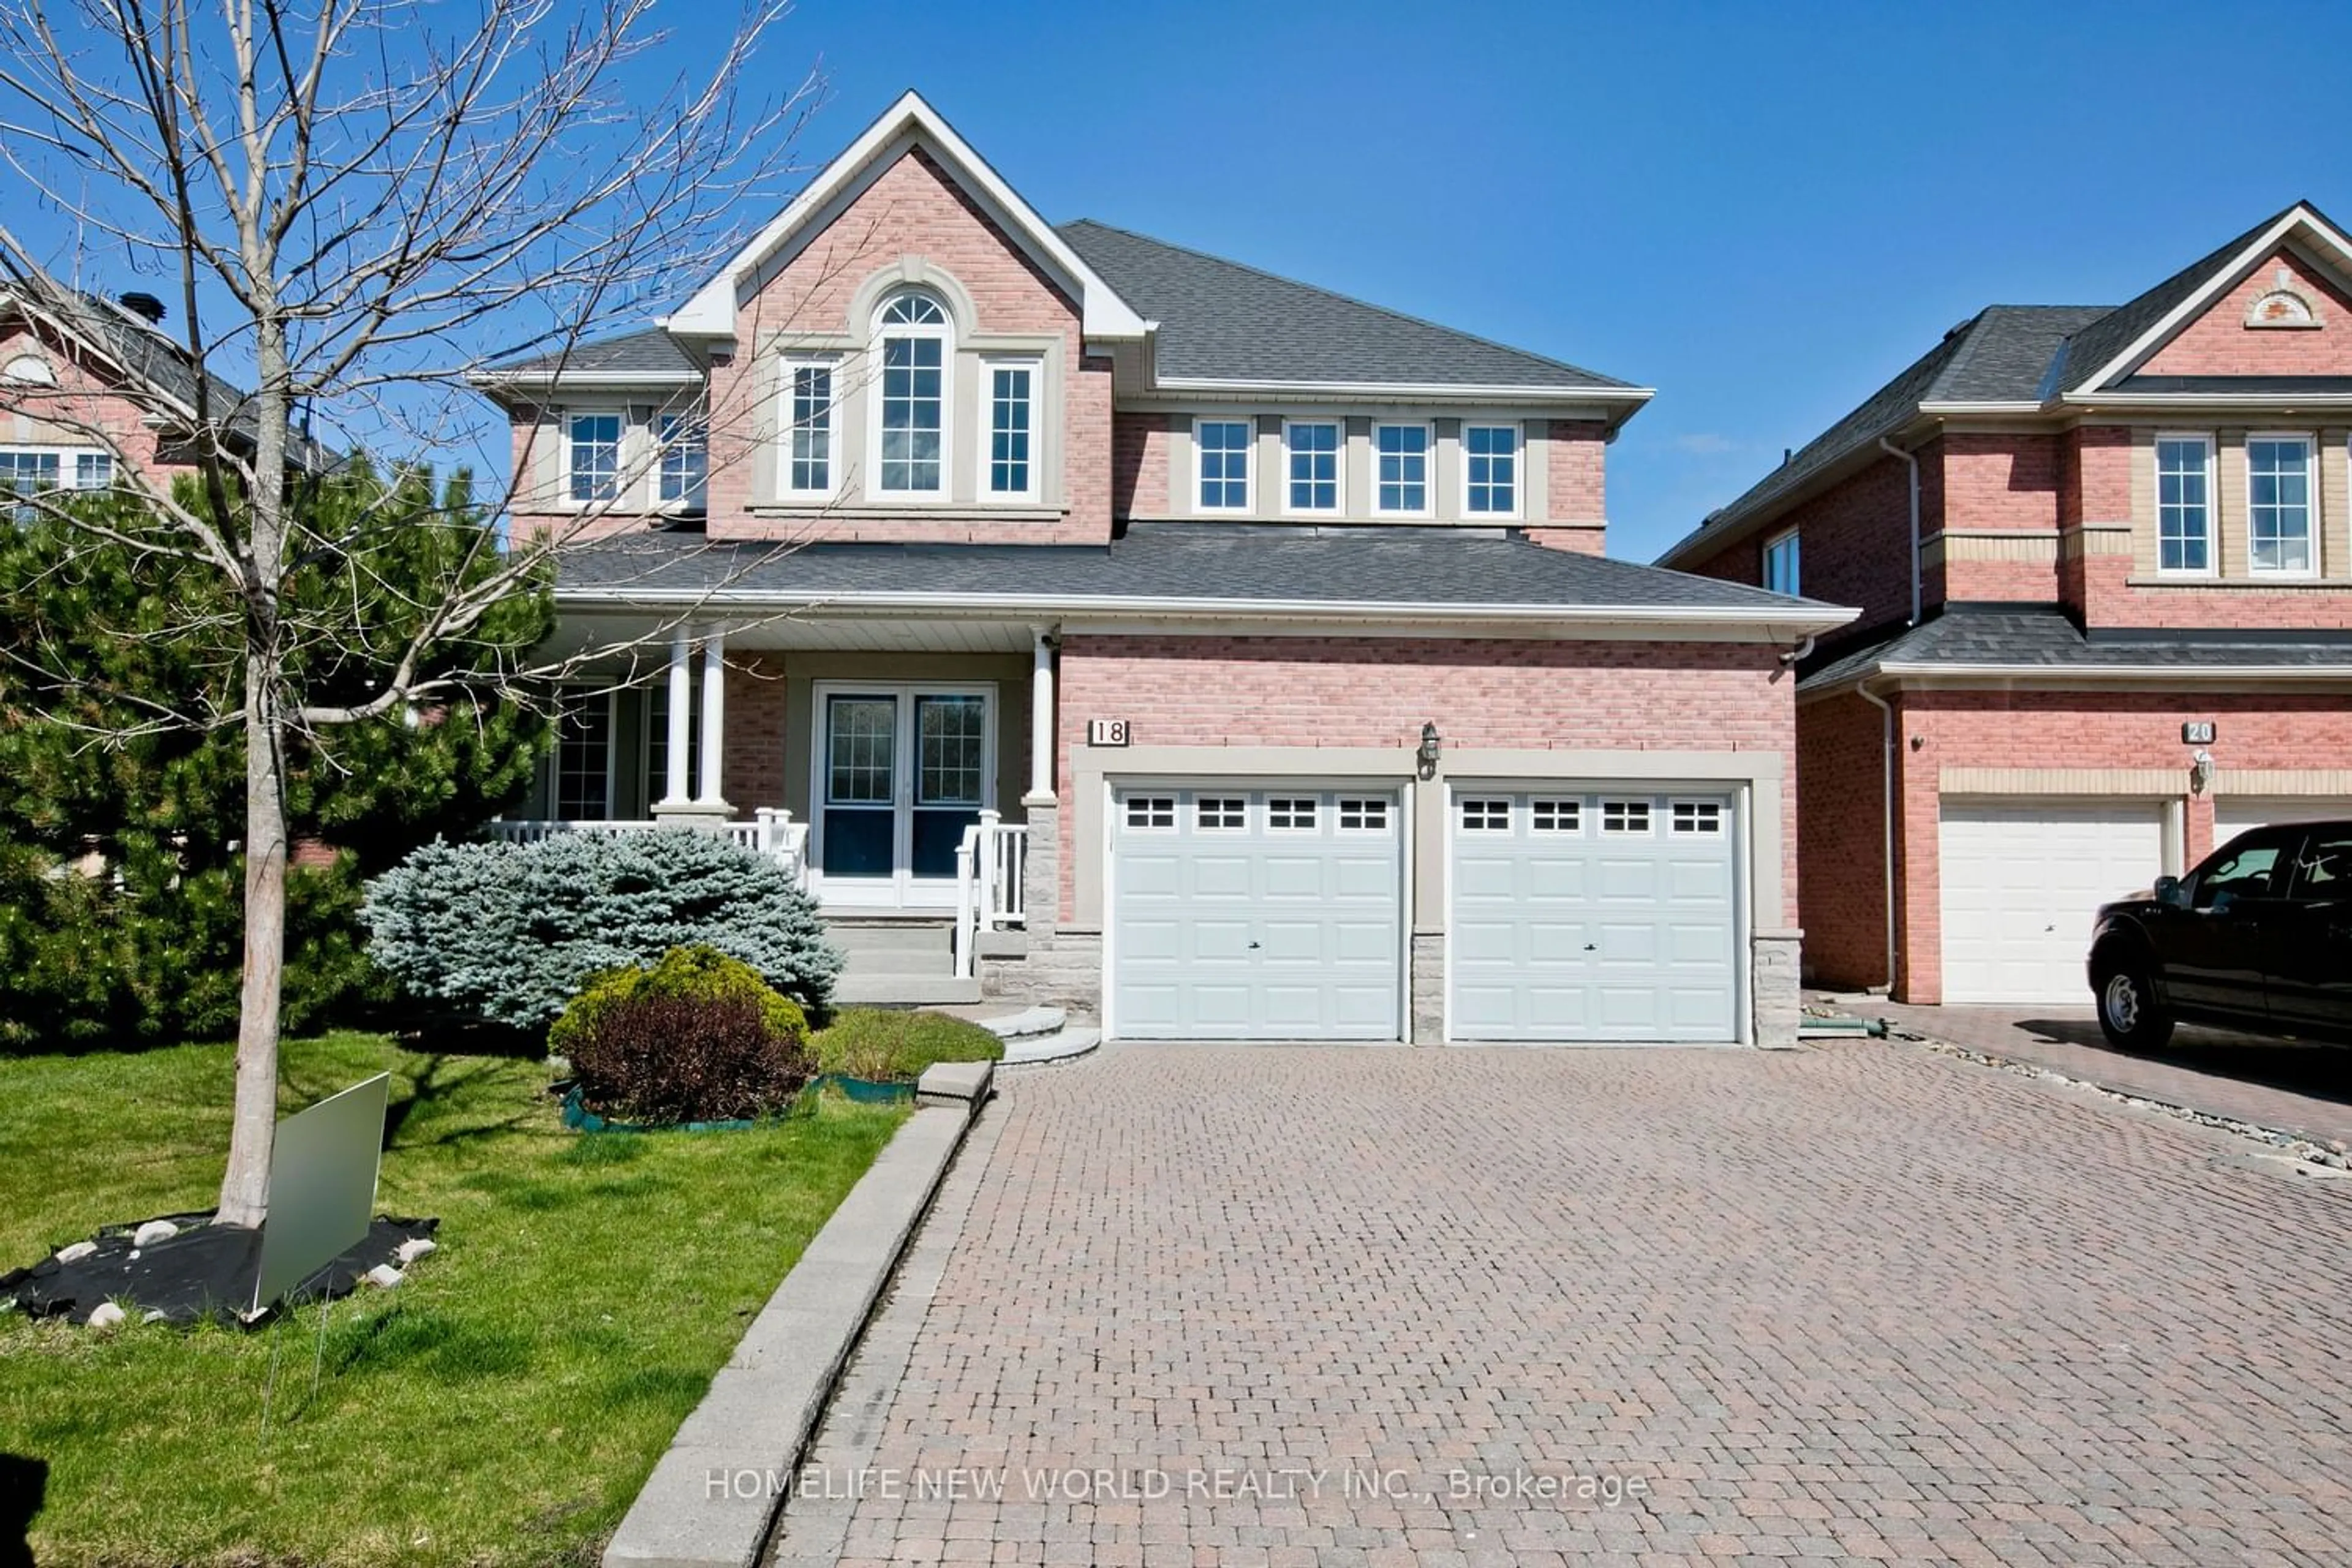 Home with brick exterior material for 18 Houndsbrook Cres, Markham Ontario L3P 7T8